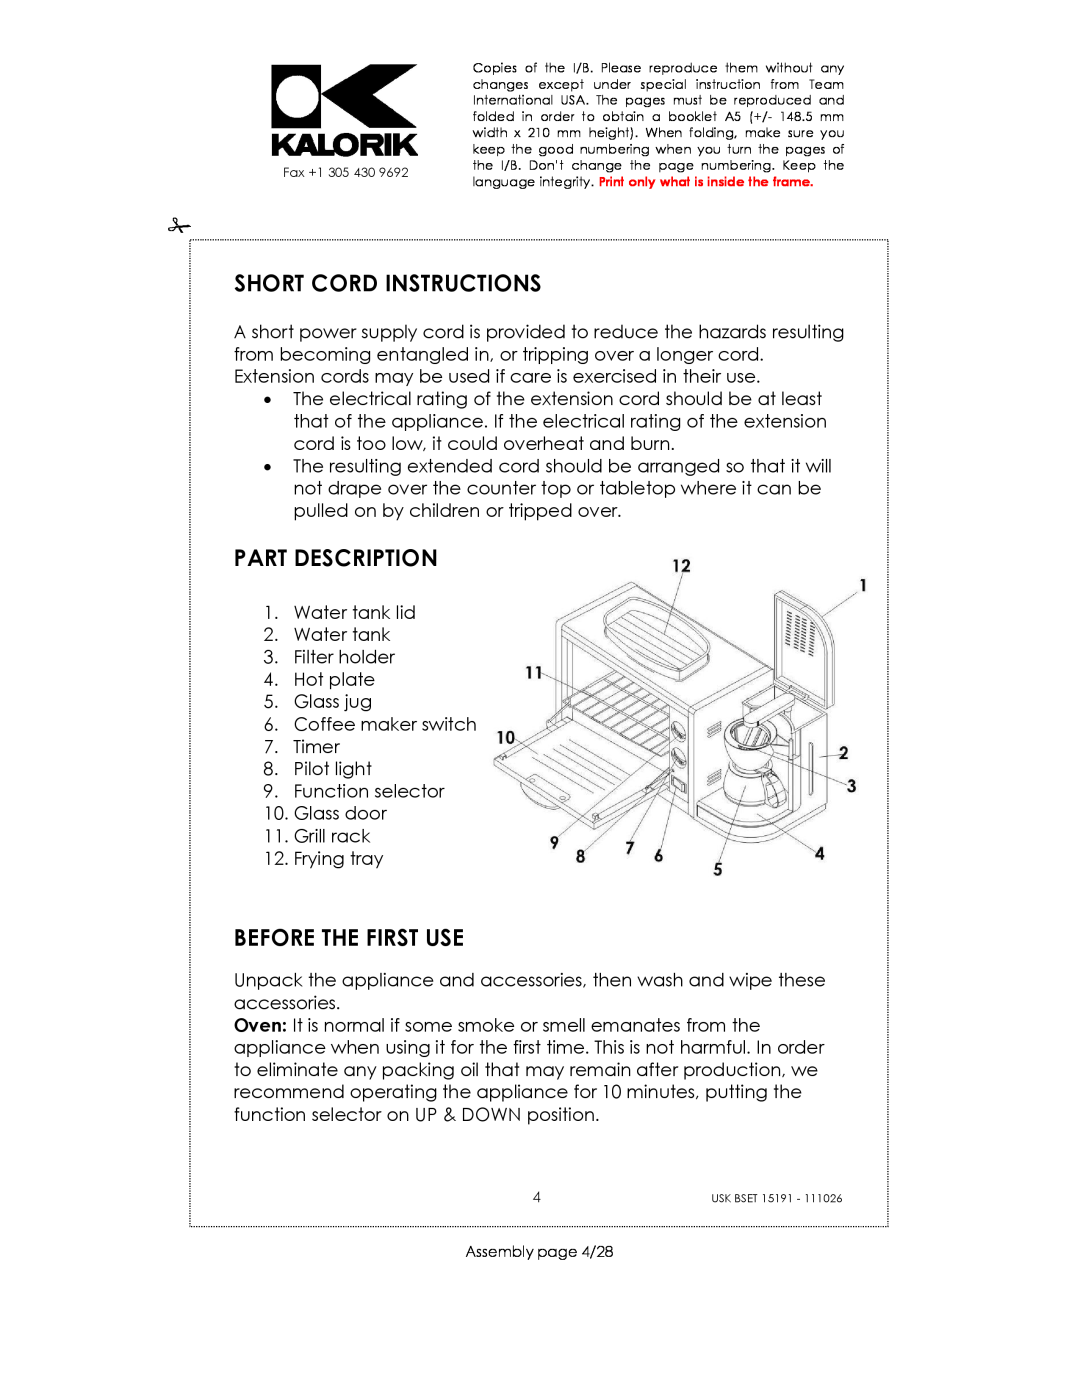 Kalorik USK BSET 15191 manual Short Cord Instructions, Part Description, Before The First Use 